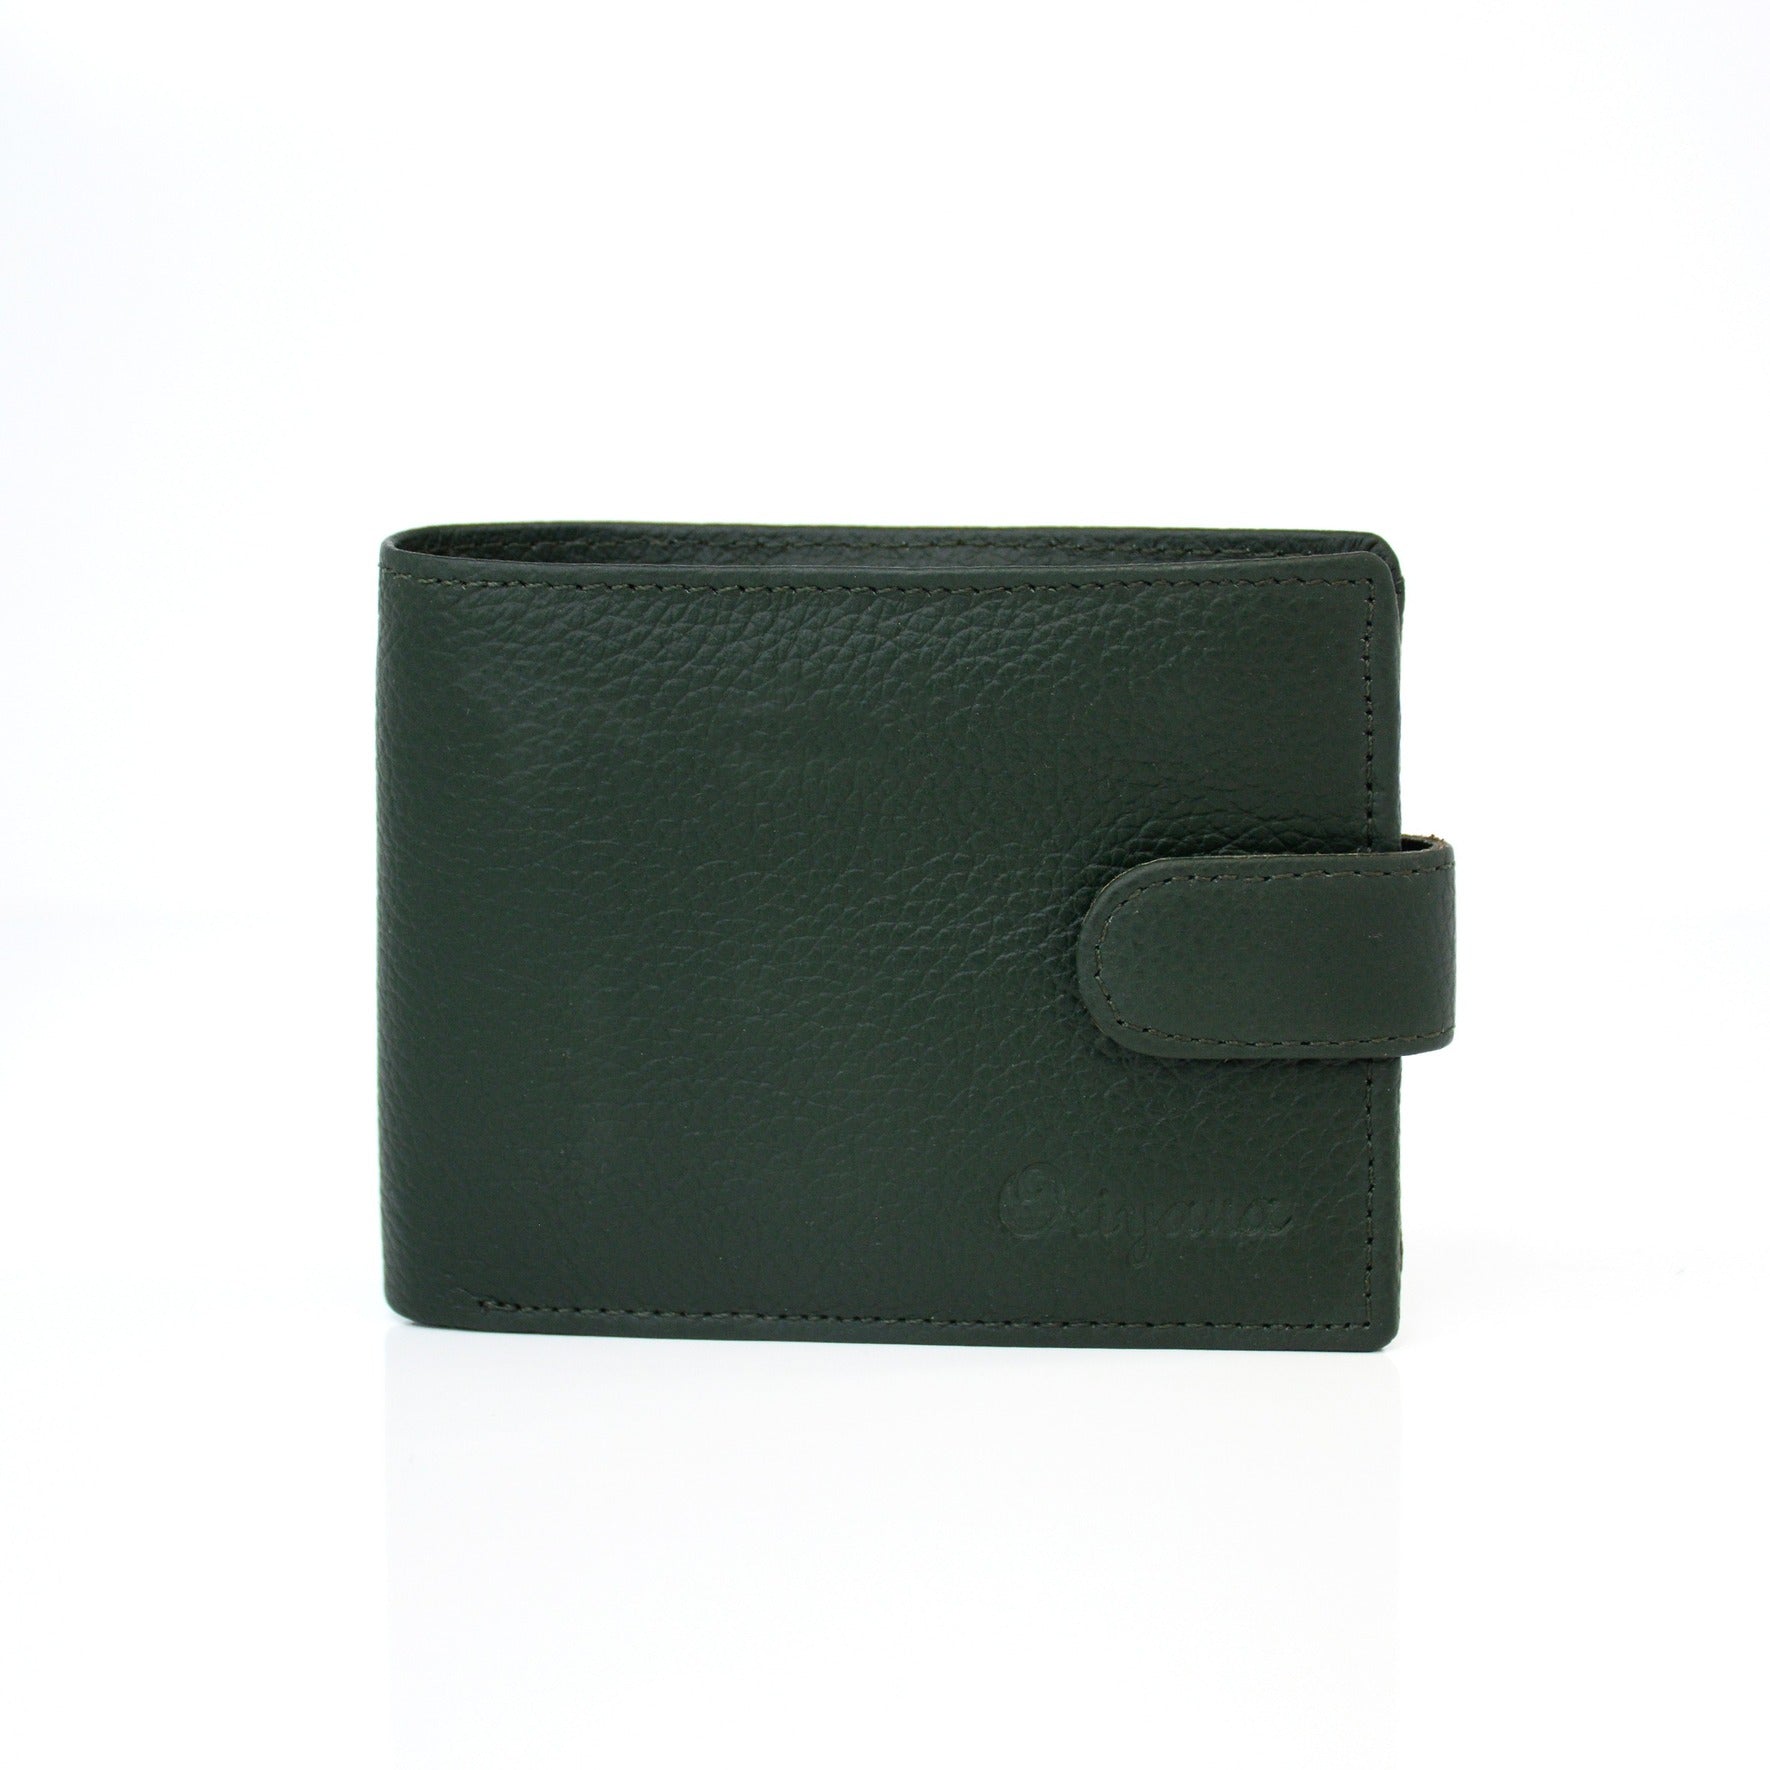  Oriyana 2 Fold Button Wallet WLT0010 For Men | Card Holder Wallet Zaappy.com